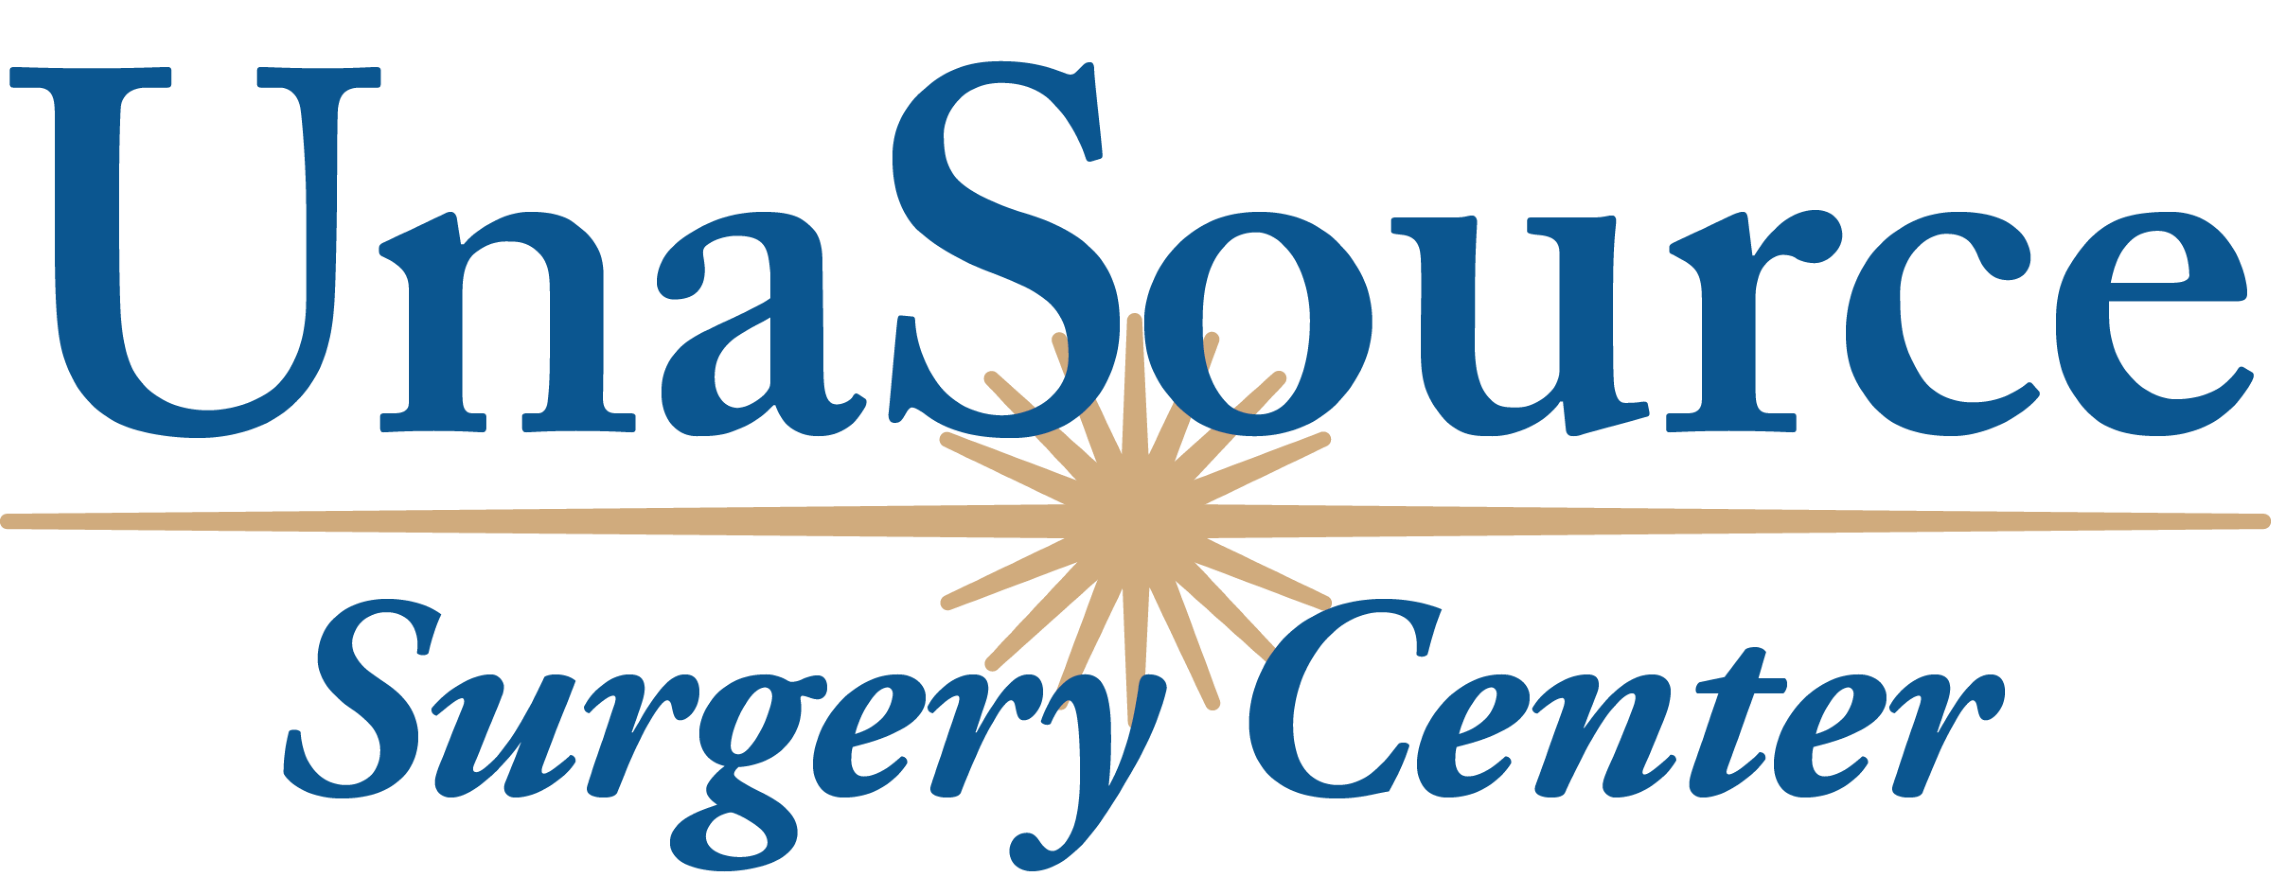 UnaSource Surgery Center logo